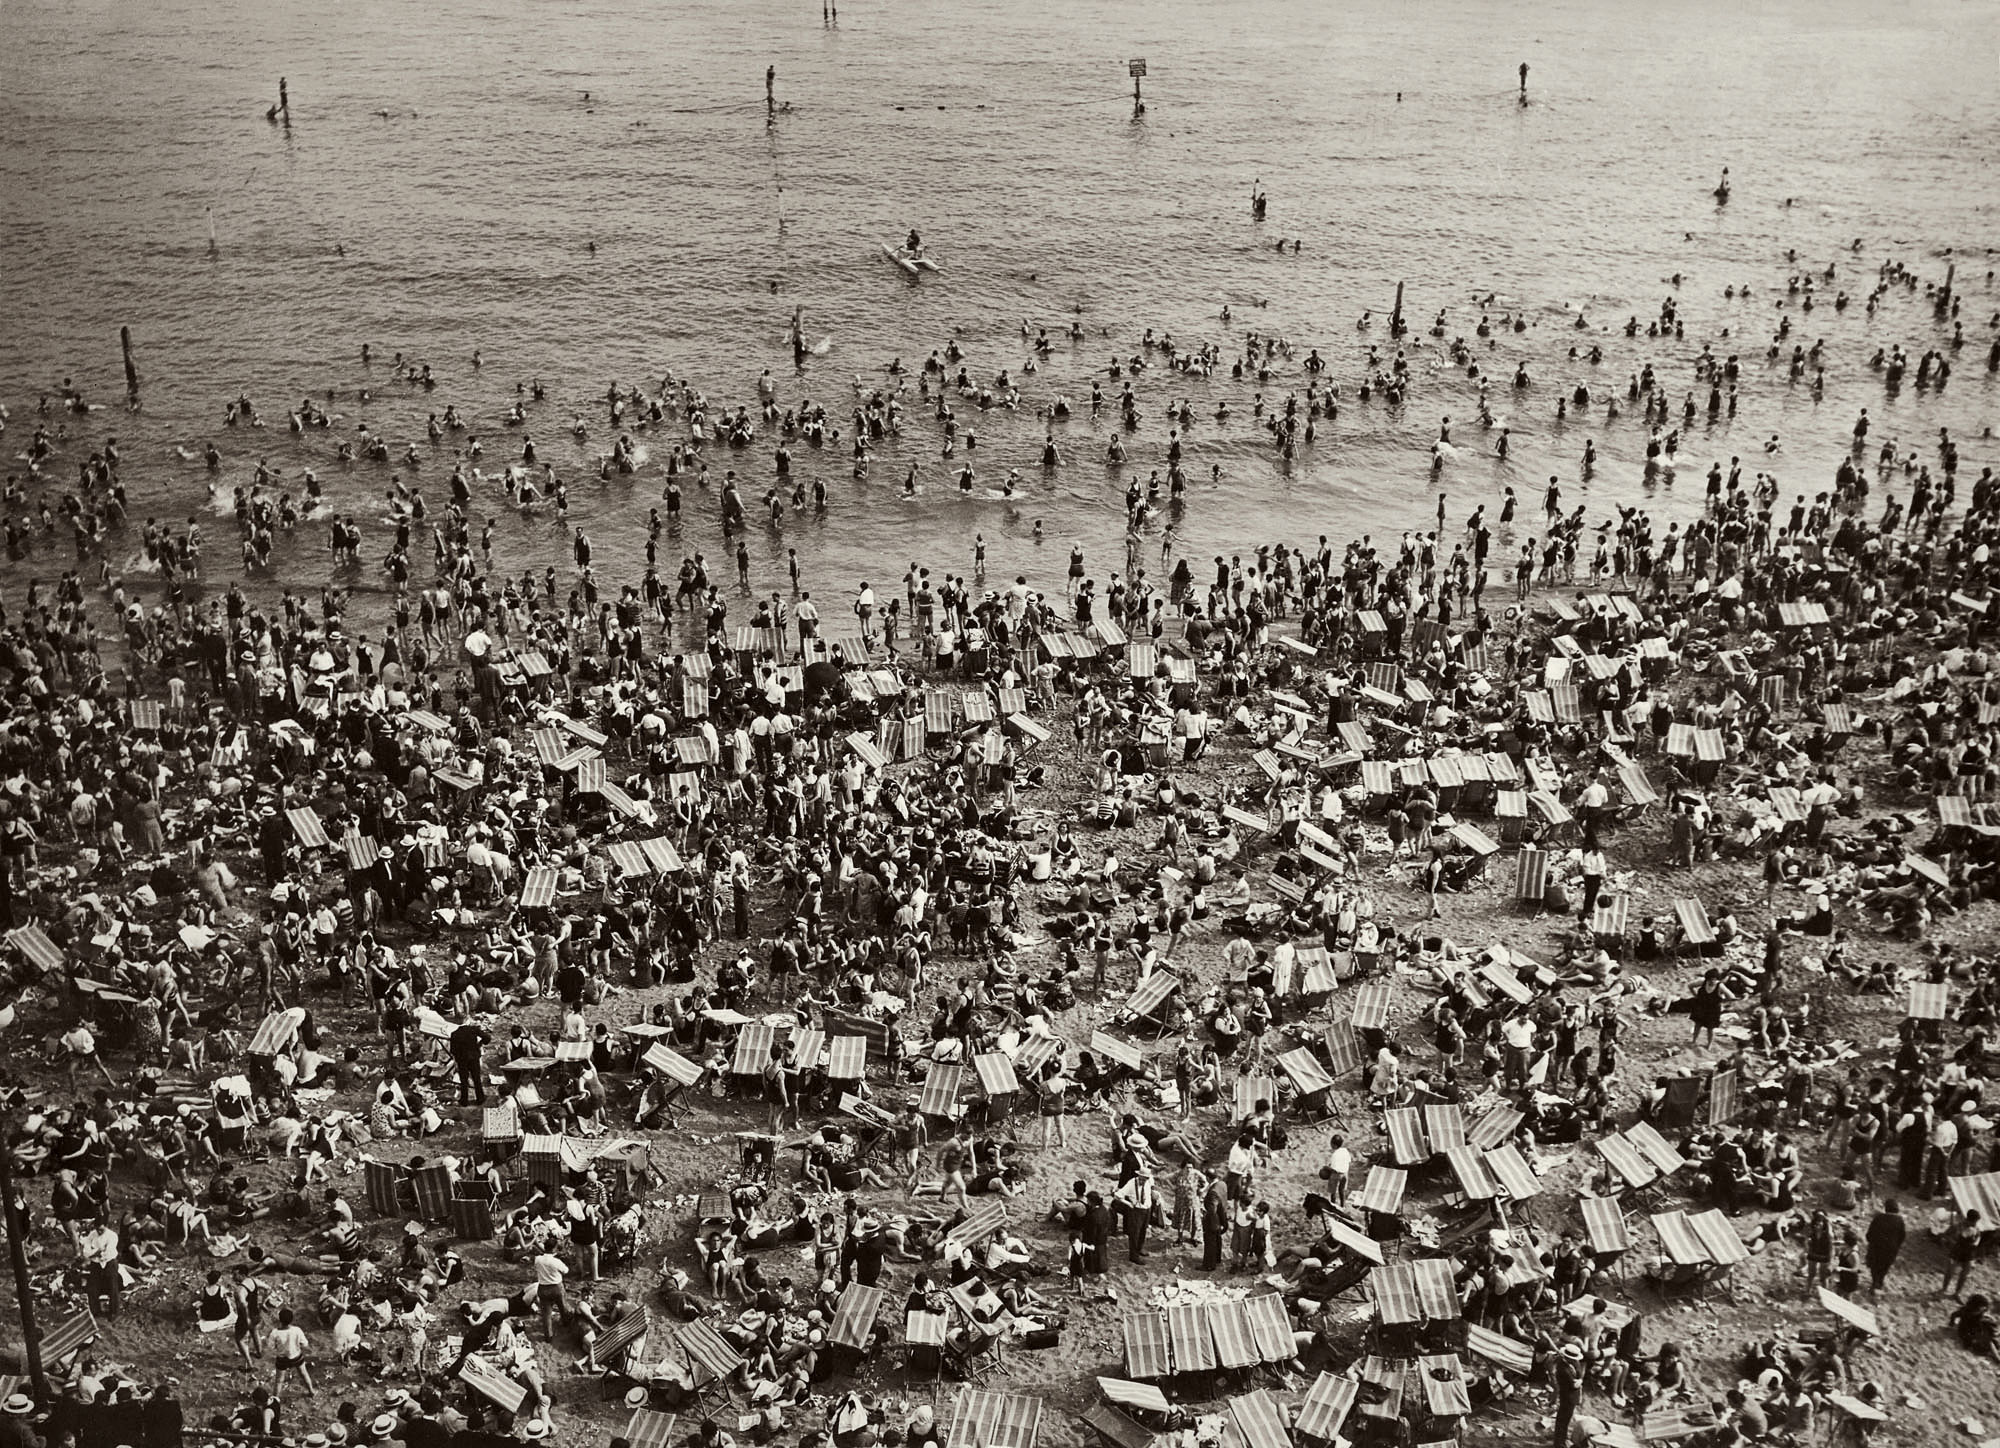 Walker Evans (American, 1903-1975) 'Coney Island Beach' c. 1929